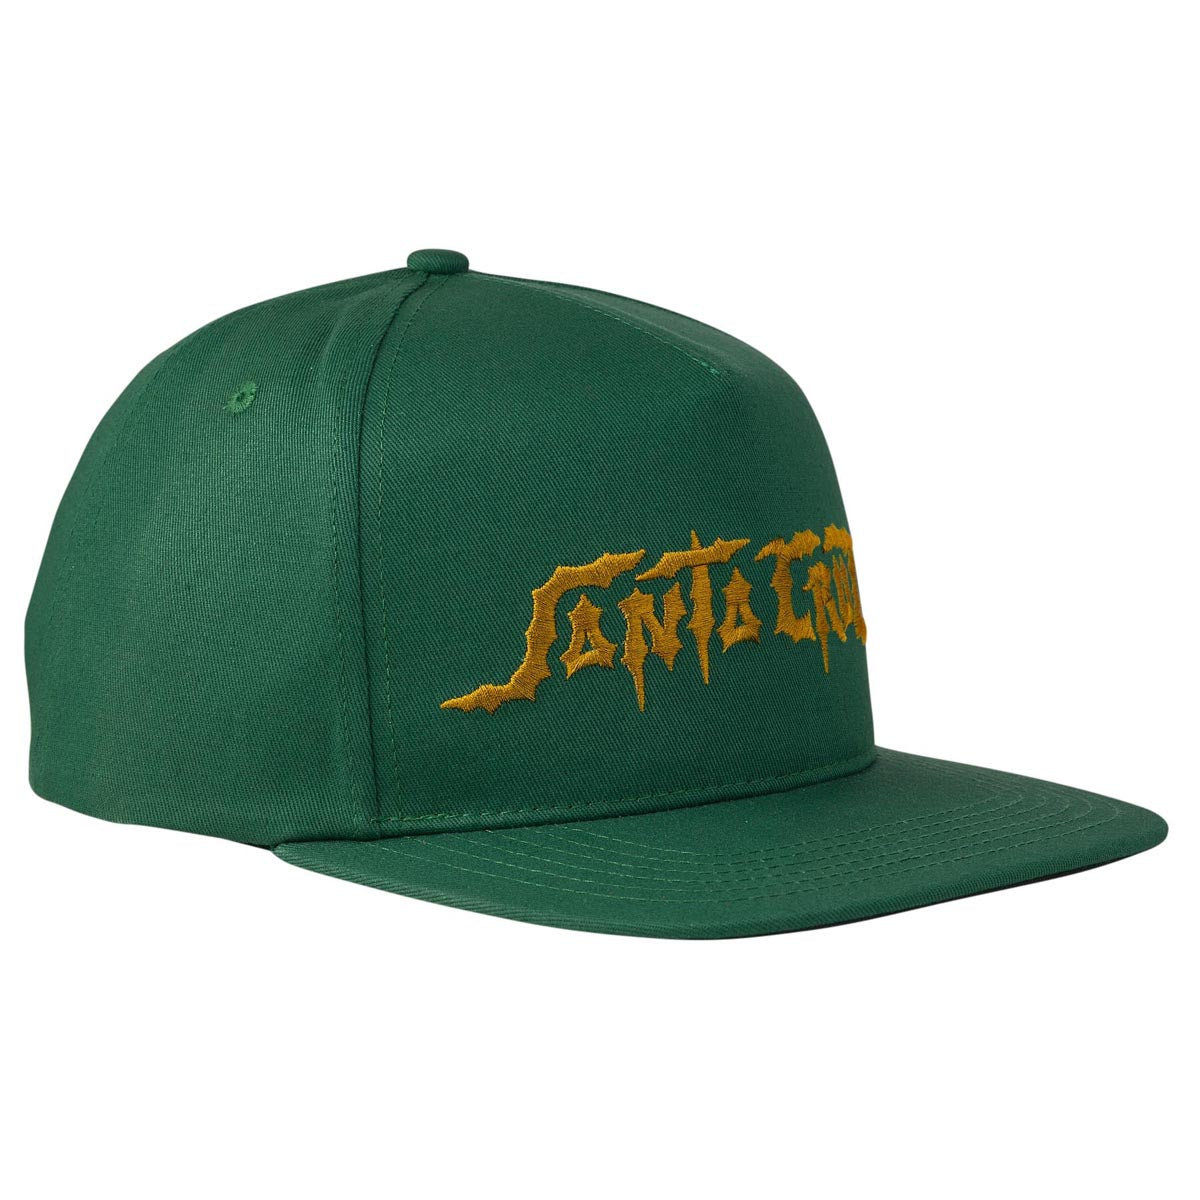 Santa Cruz Dungeon Strip Snapback Hat - Dark Green image 2